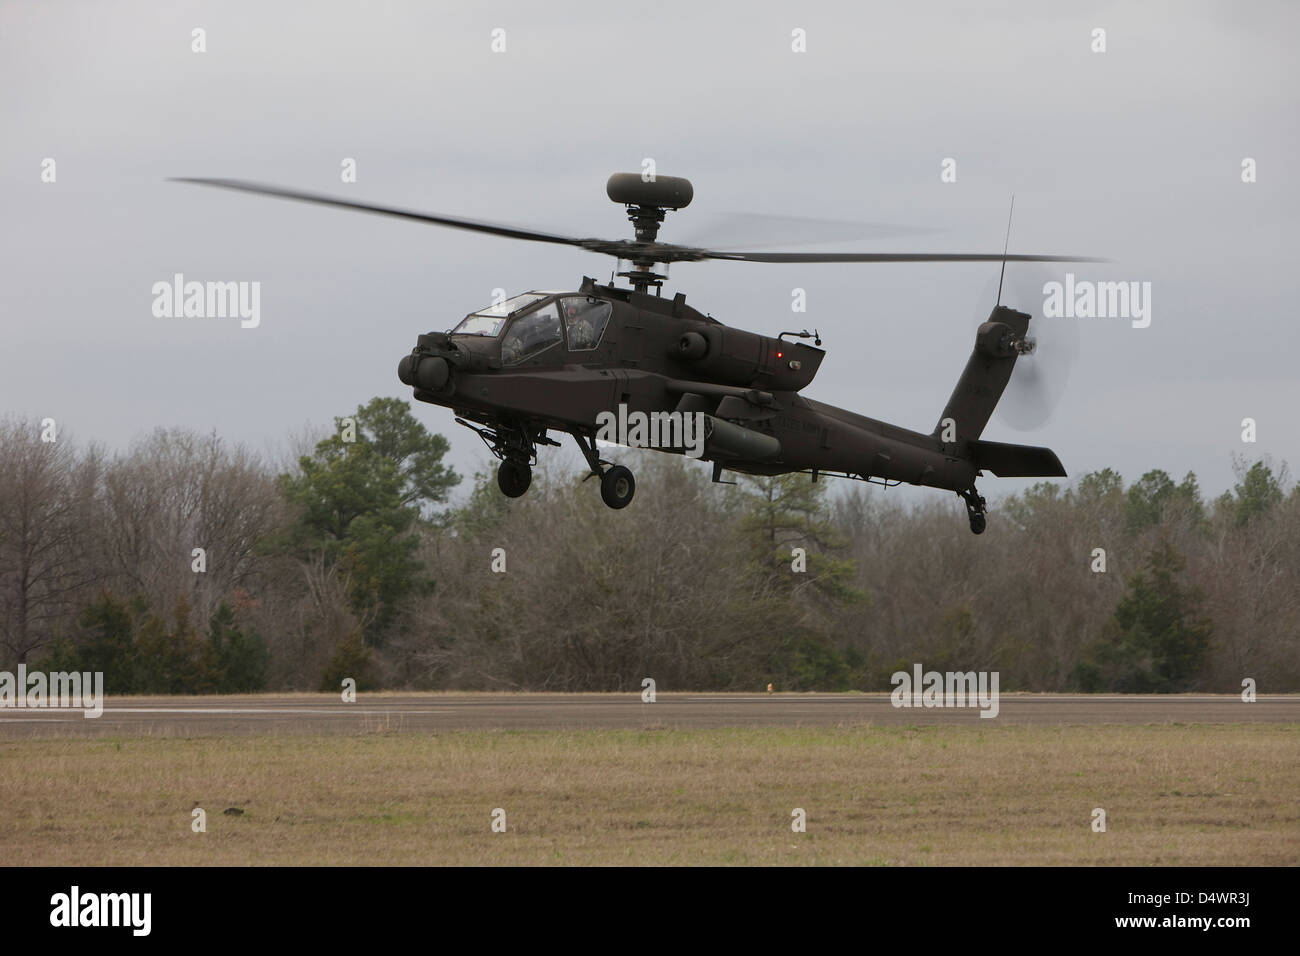 An AH-64 Apache helicopter in midair, Conroe, Texas. Stock Photo